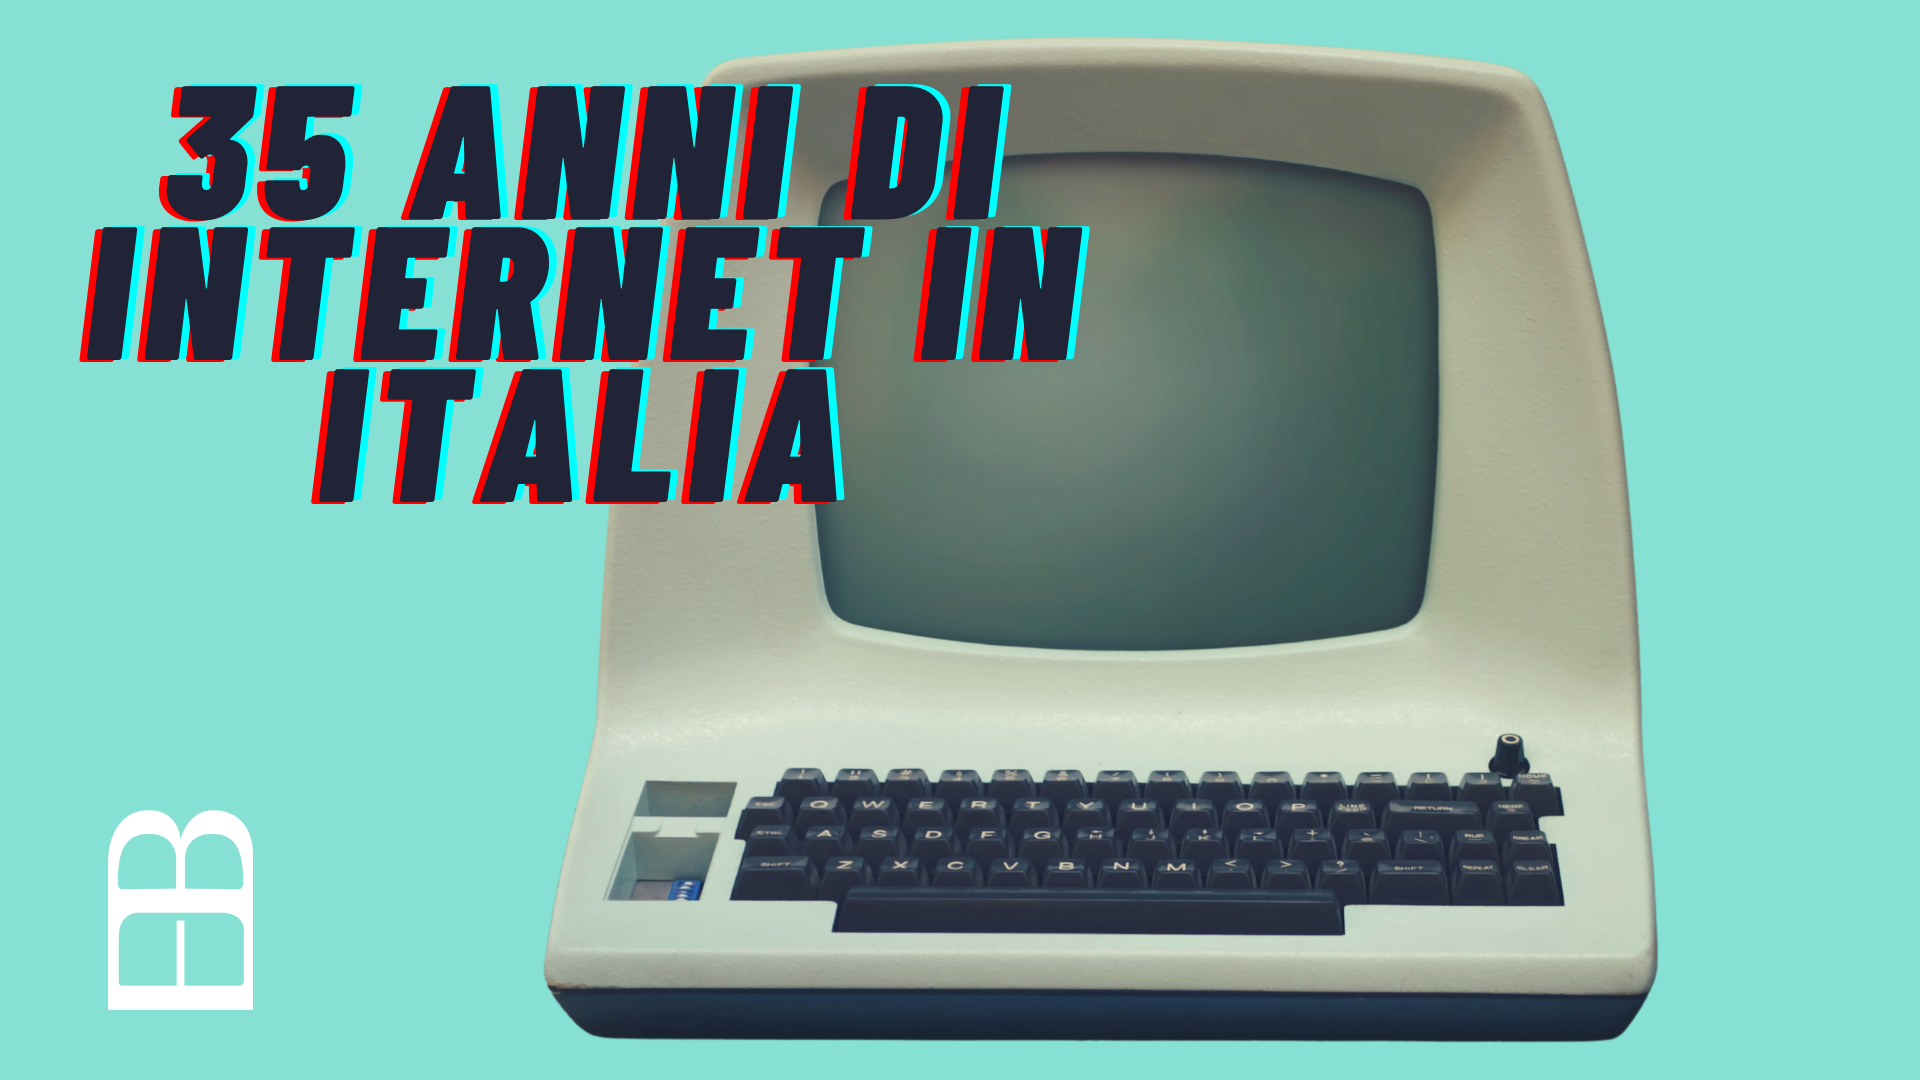 Internet in Italia